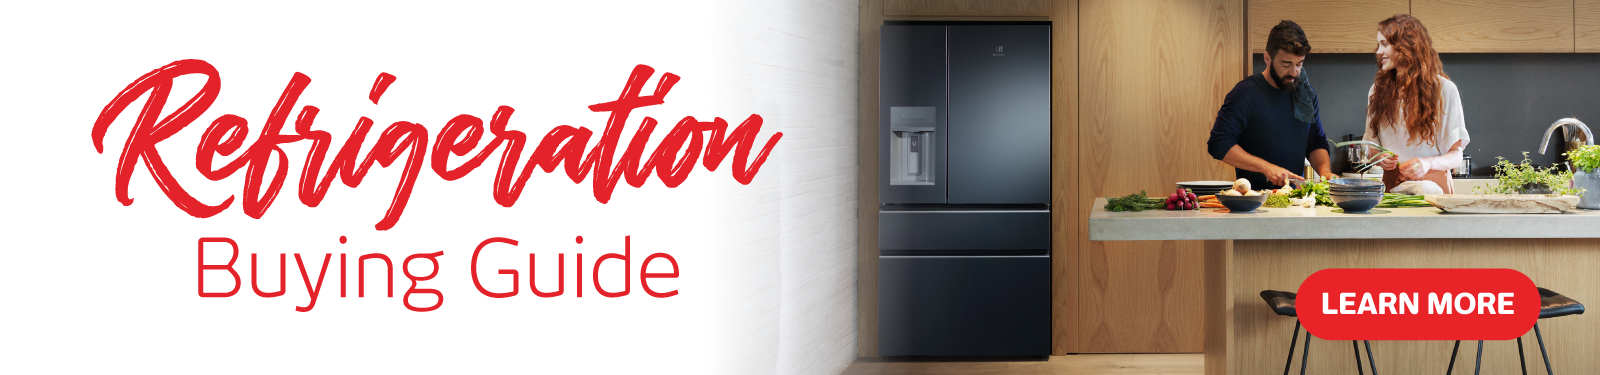 Refrigeration Buying Guide at Retravision